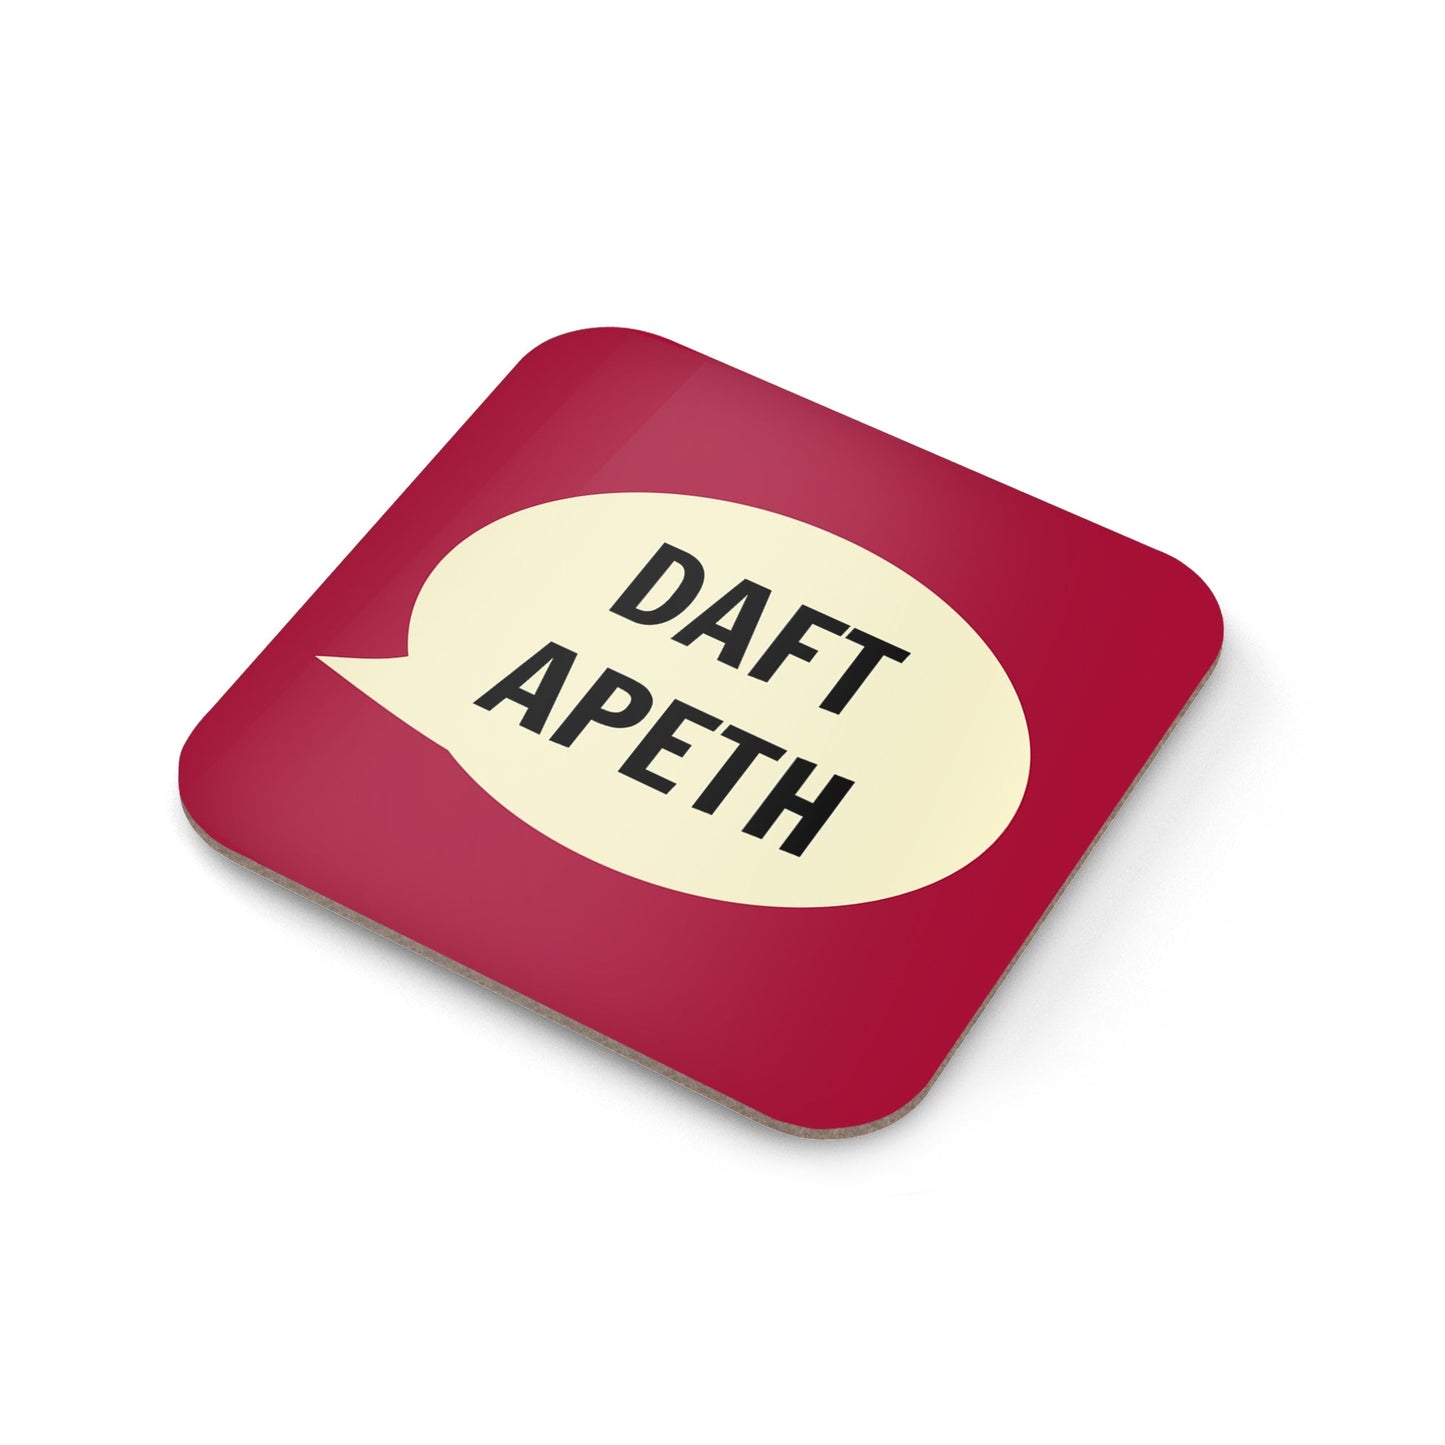 Daft Apeth Coaster - The Great Yorkshire Shop